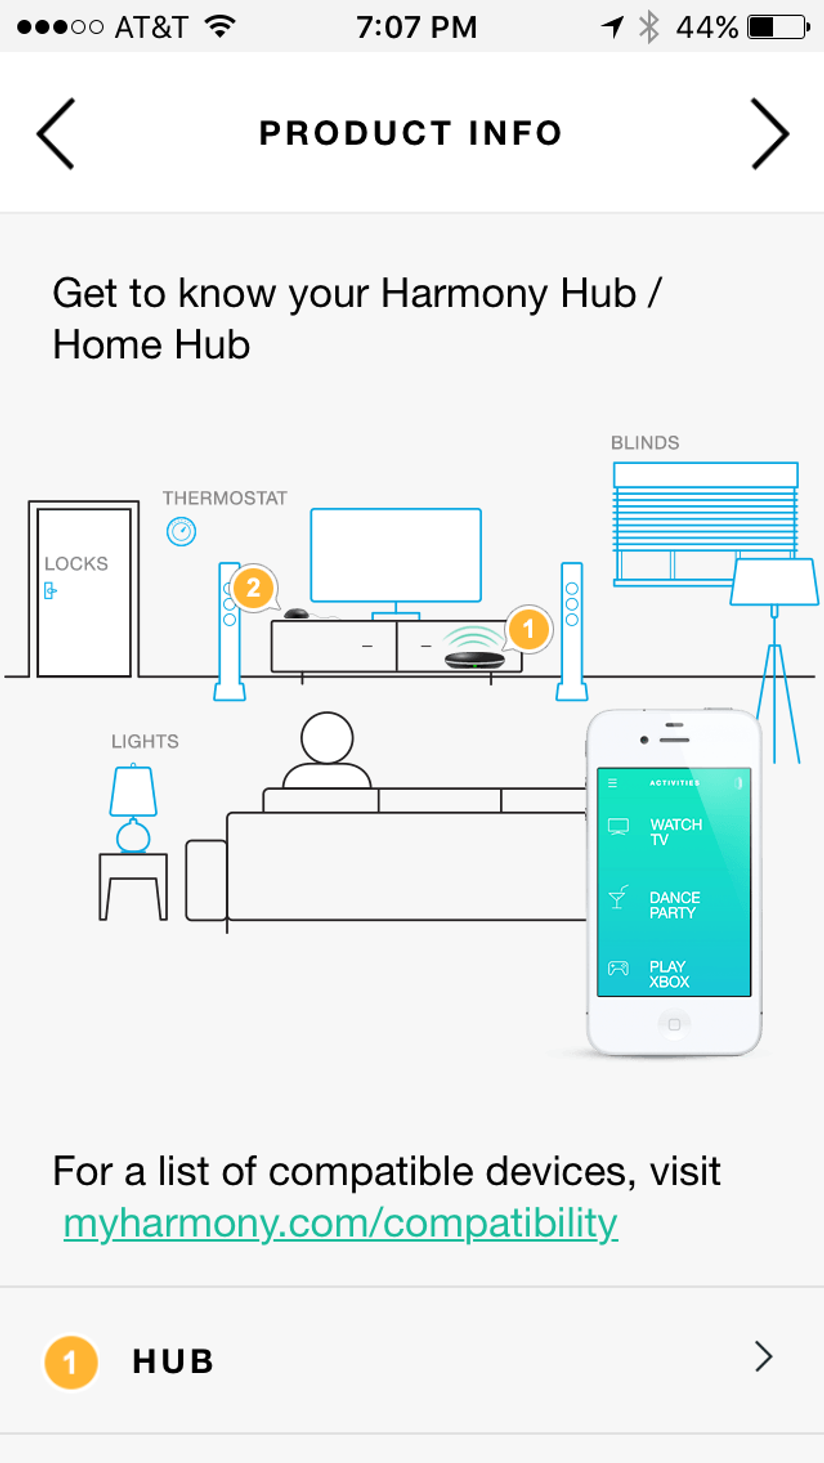 Fire tablets get new Device Dashboard smart home app - Gearbrain